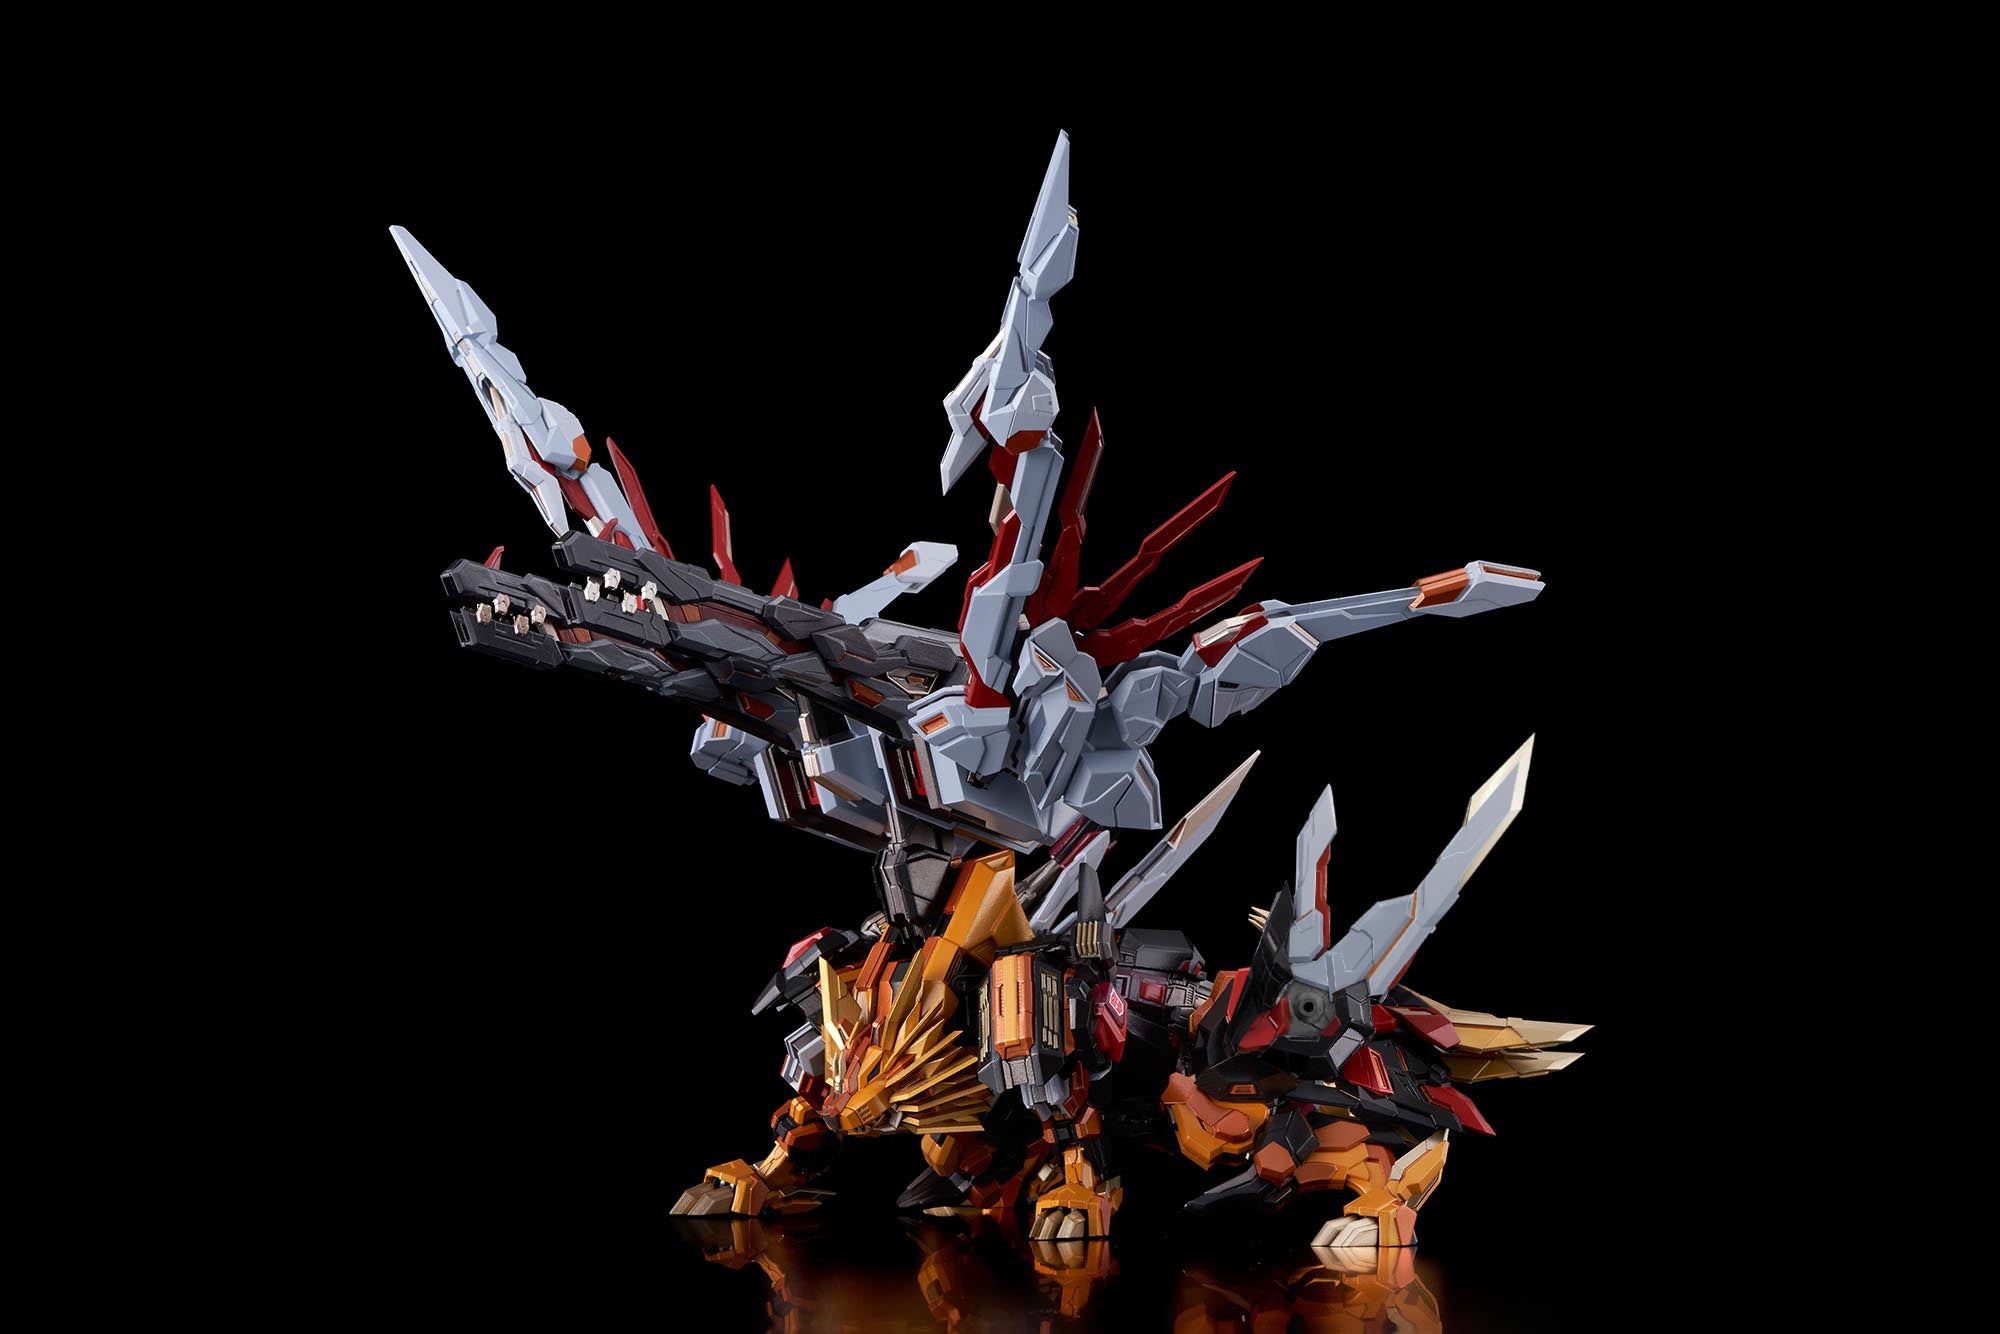 Flame Toys - Transformers - Kuro Kara Kuri 06 - Victory Leo - Marvelous Toys